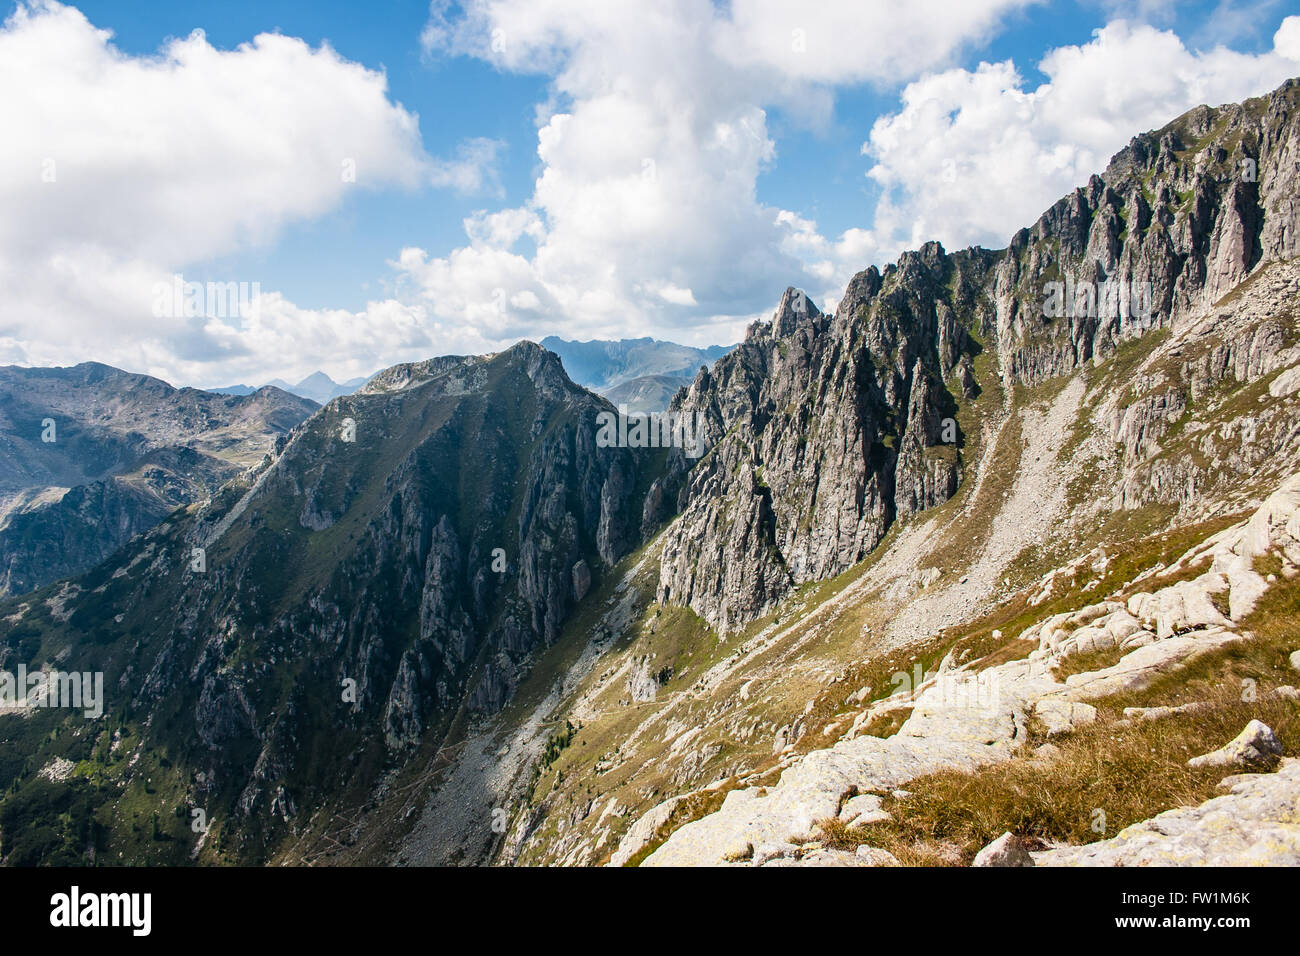 Landscape from the Lagorai Mountains near Cima d'Asta; Trentino-Alto-Adige, Italy. Stock Photo